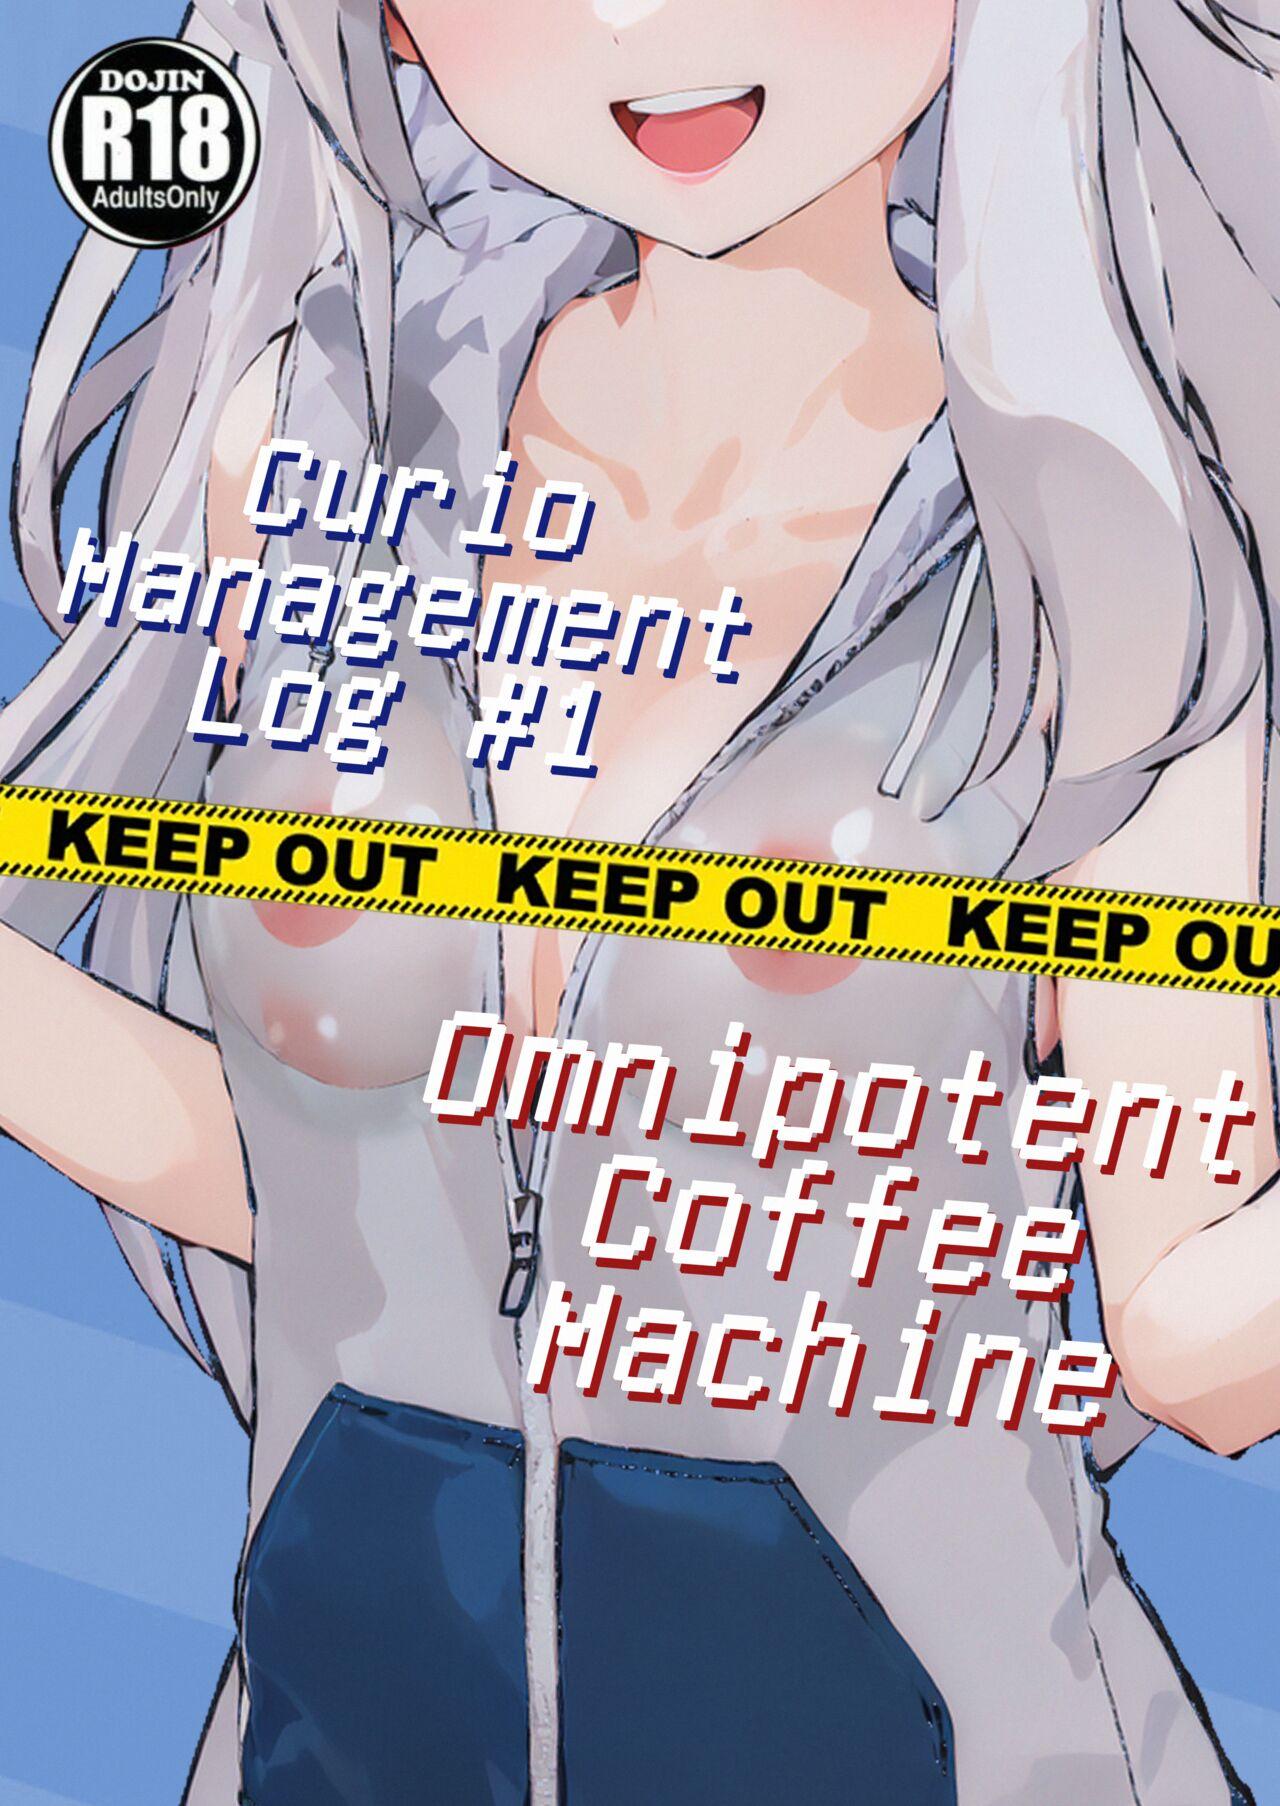 Curio Management Log #1 | Omnipotent Coffee Machine 1